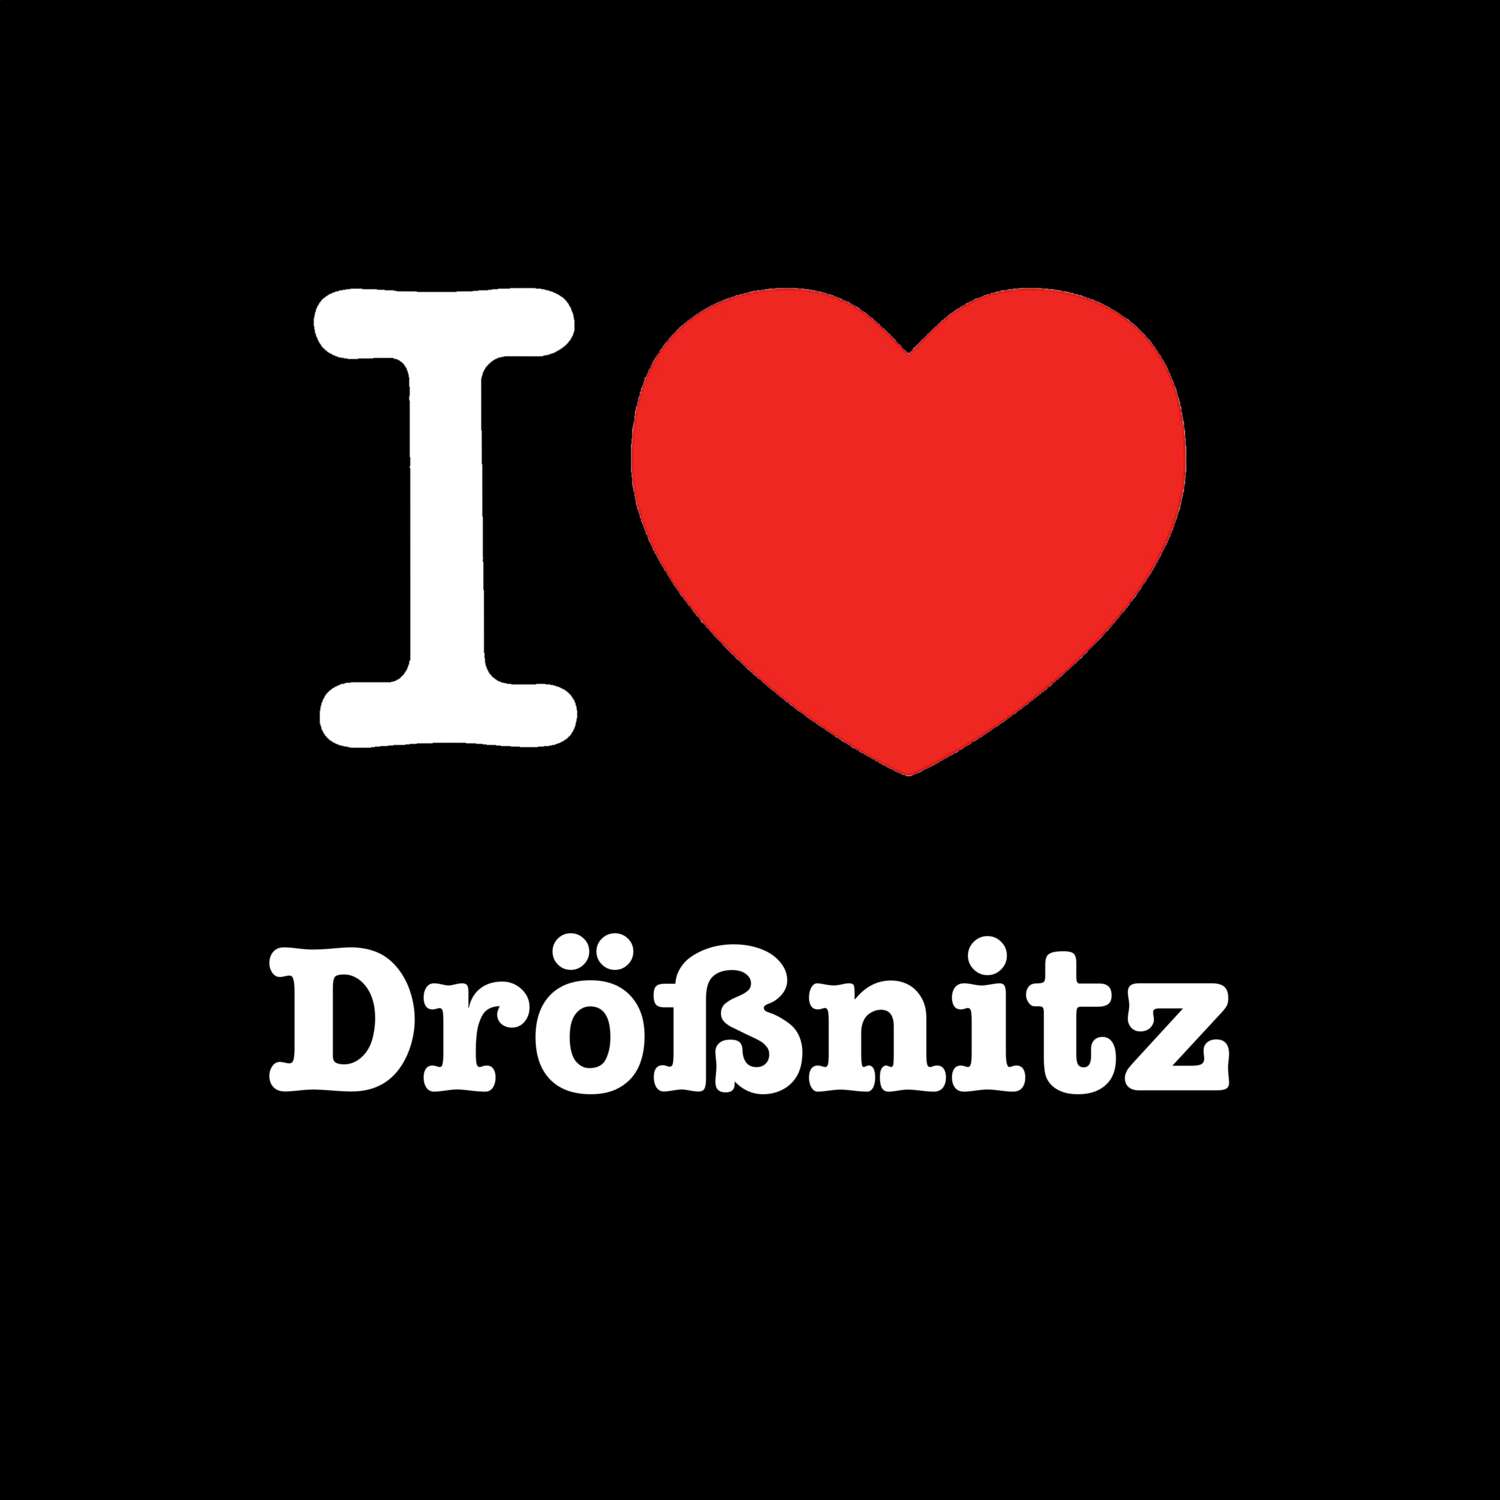 Drößnitz T-Shirt »I love«